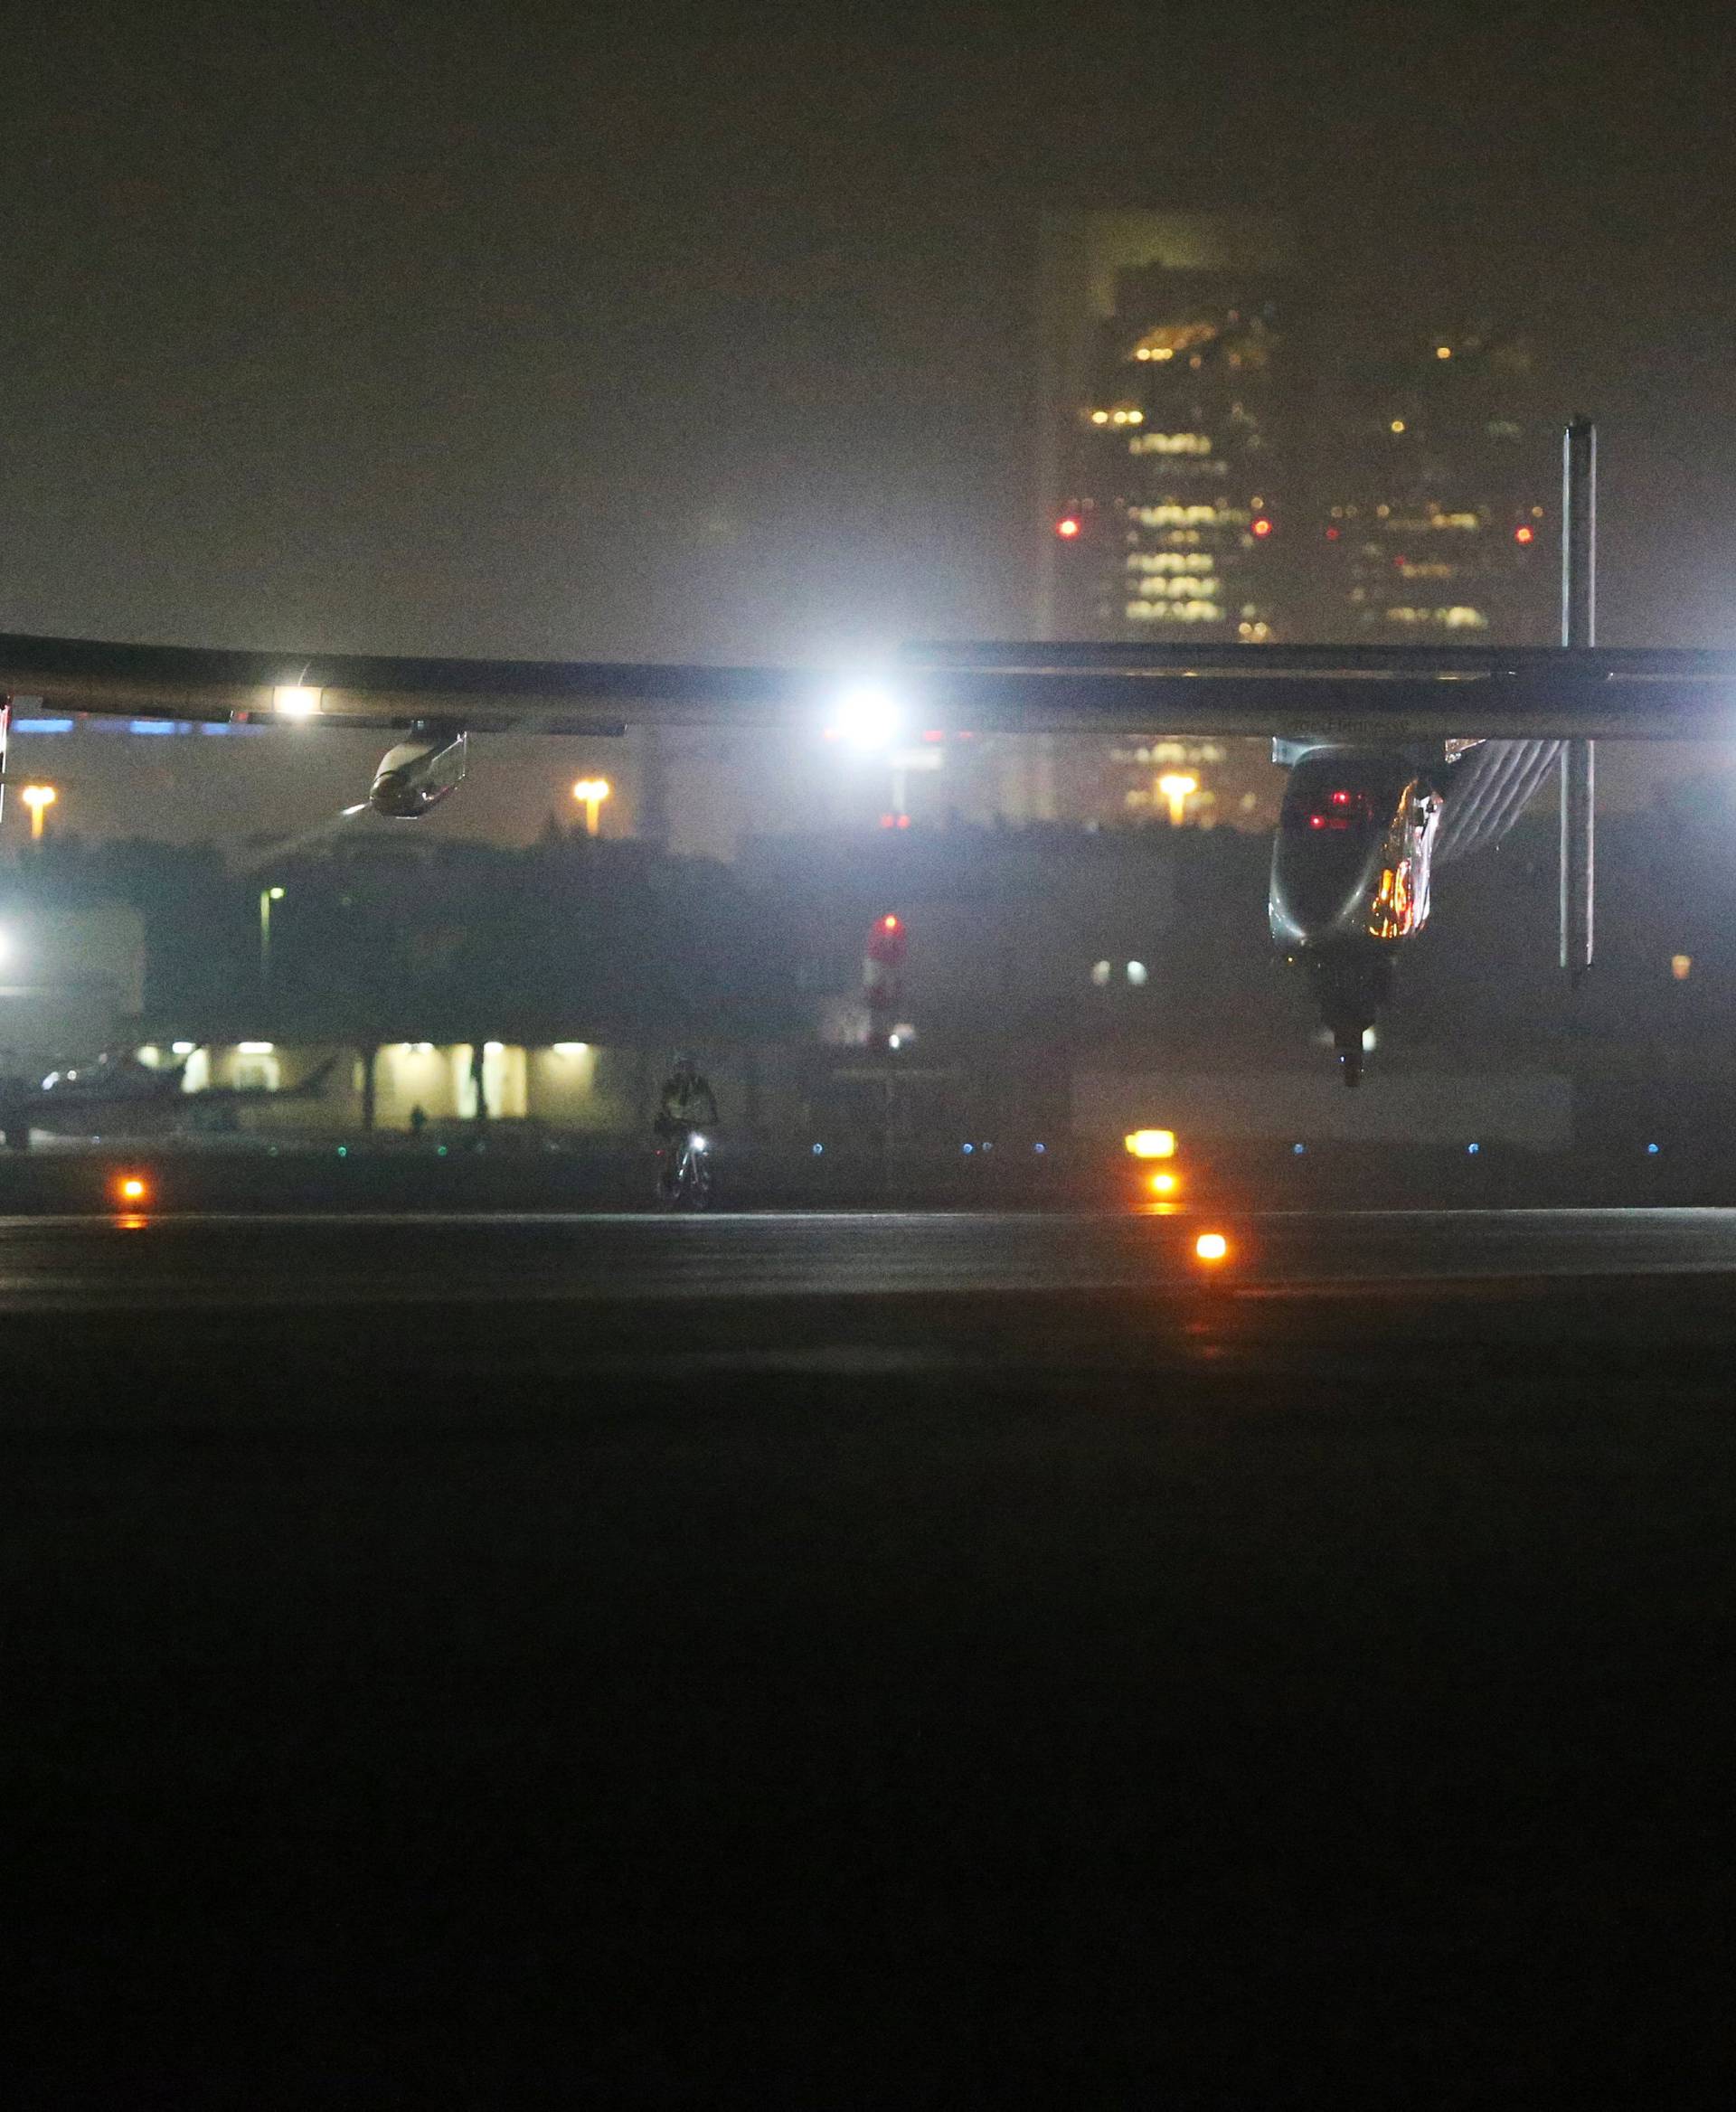 Solar Impulse 2, a solar powered plane, lands at an airport in Abu Dhabi, UAE